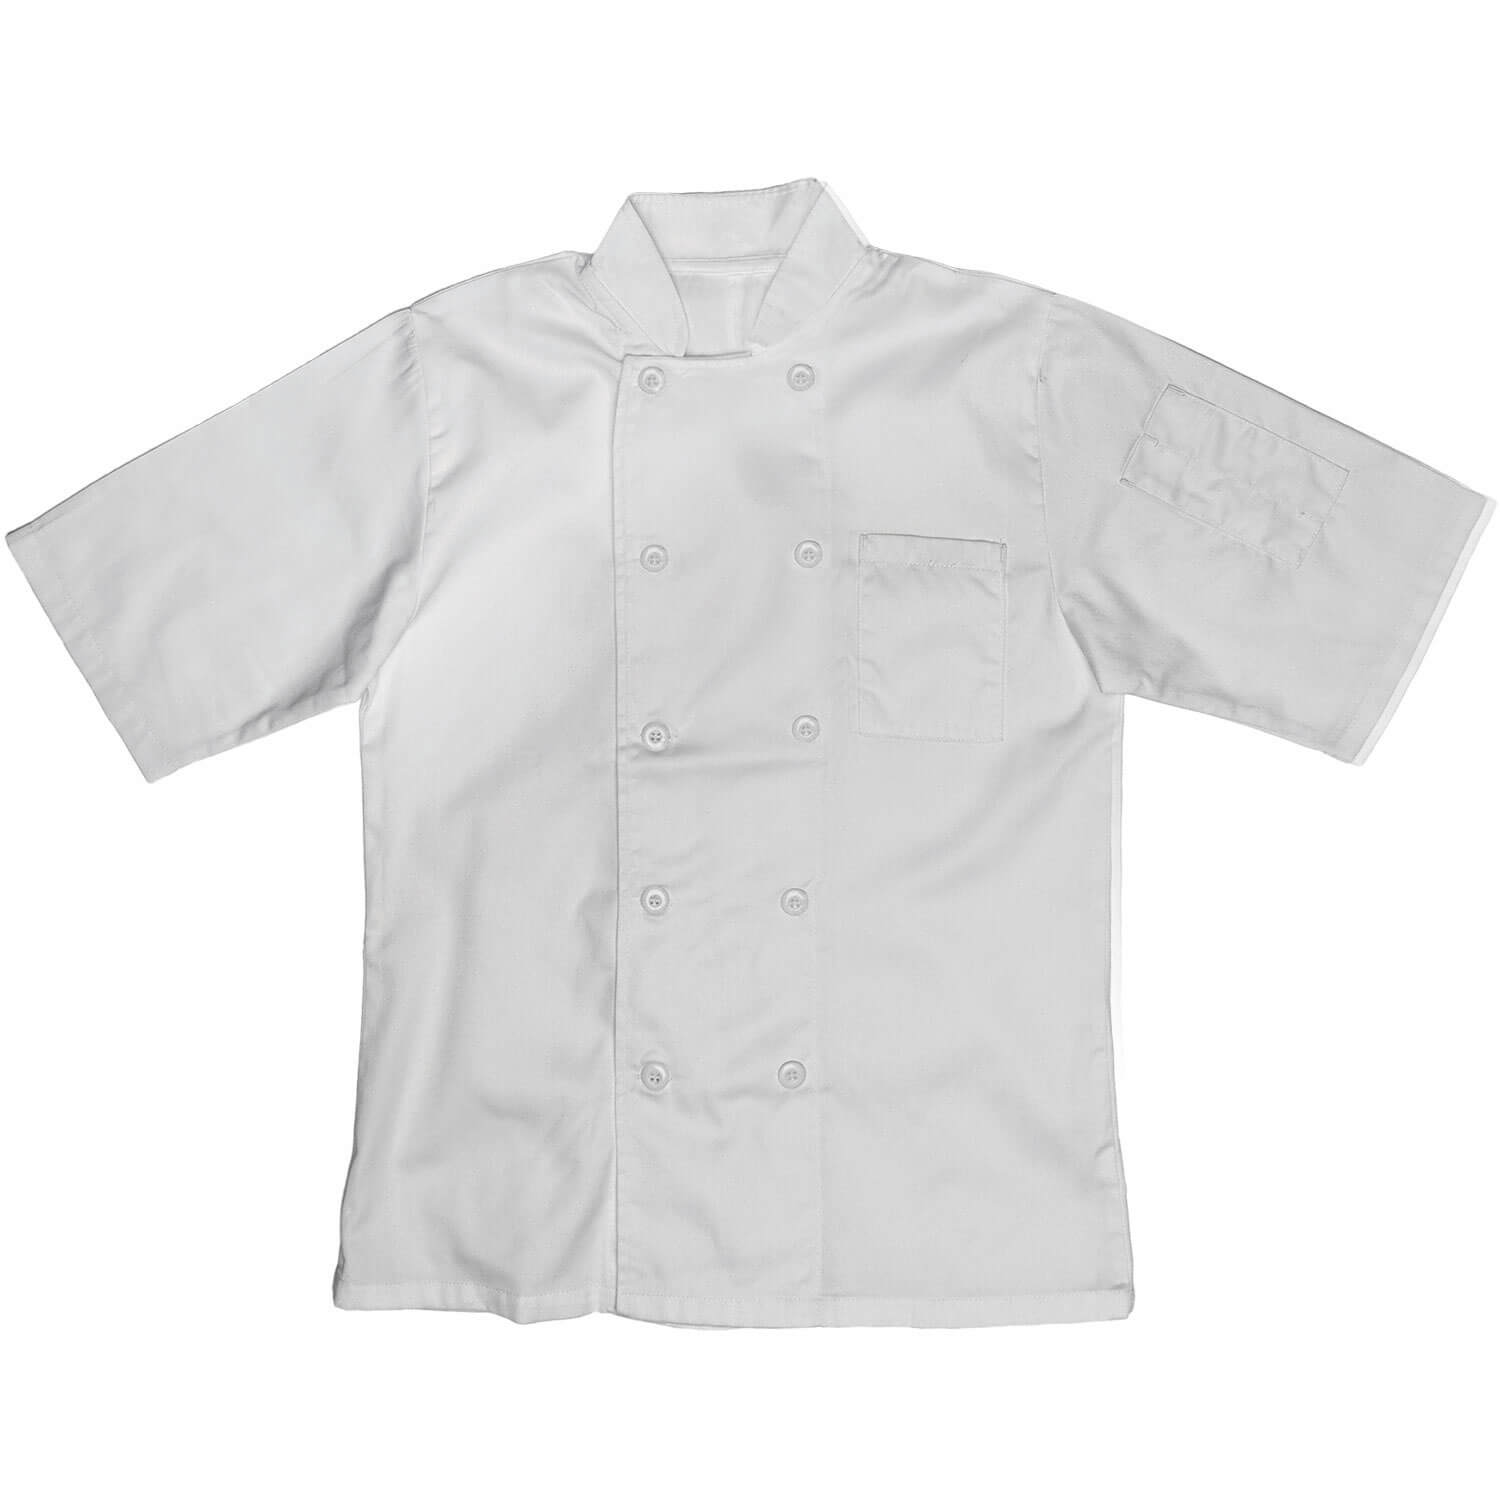 javlin short sleeve chef jacket 4653 WH PC